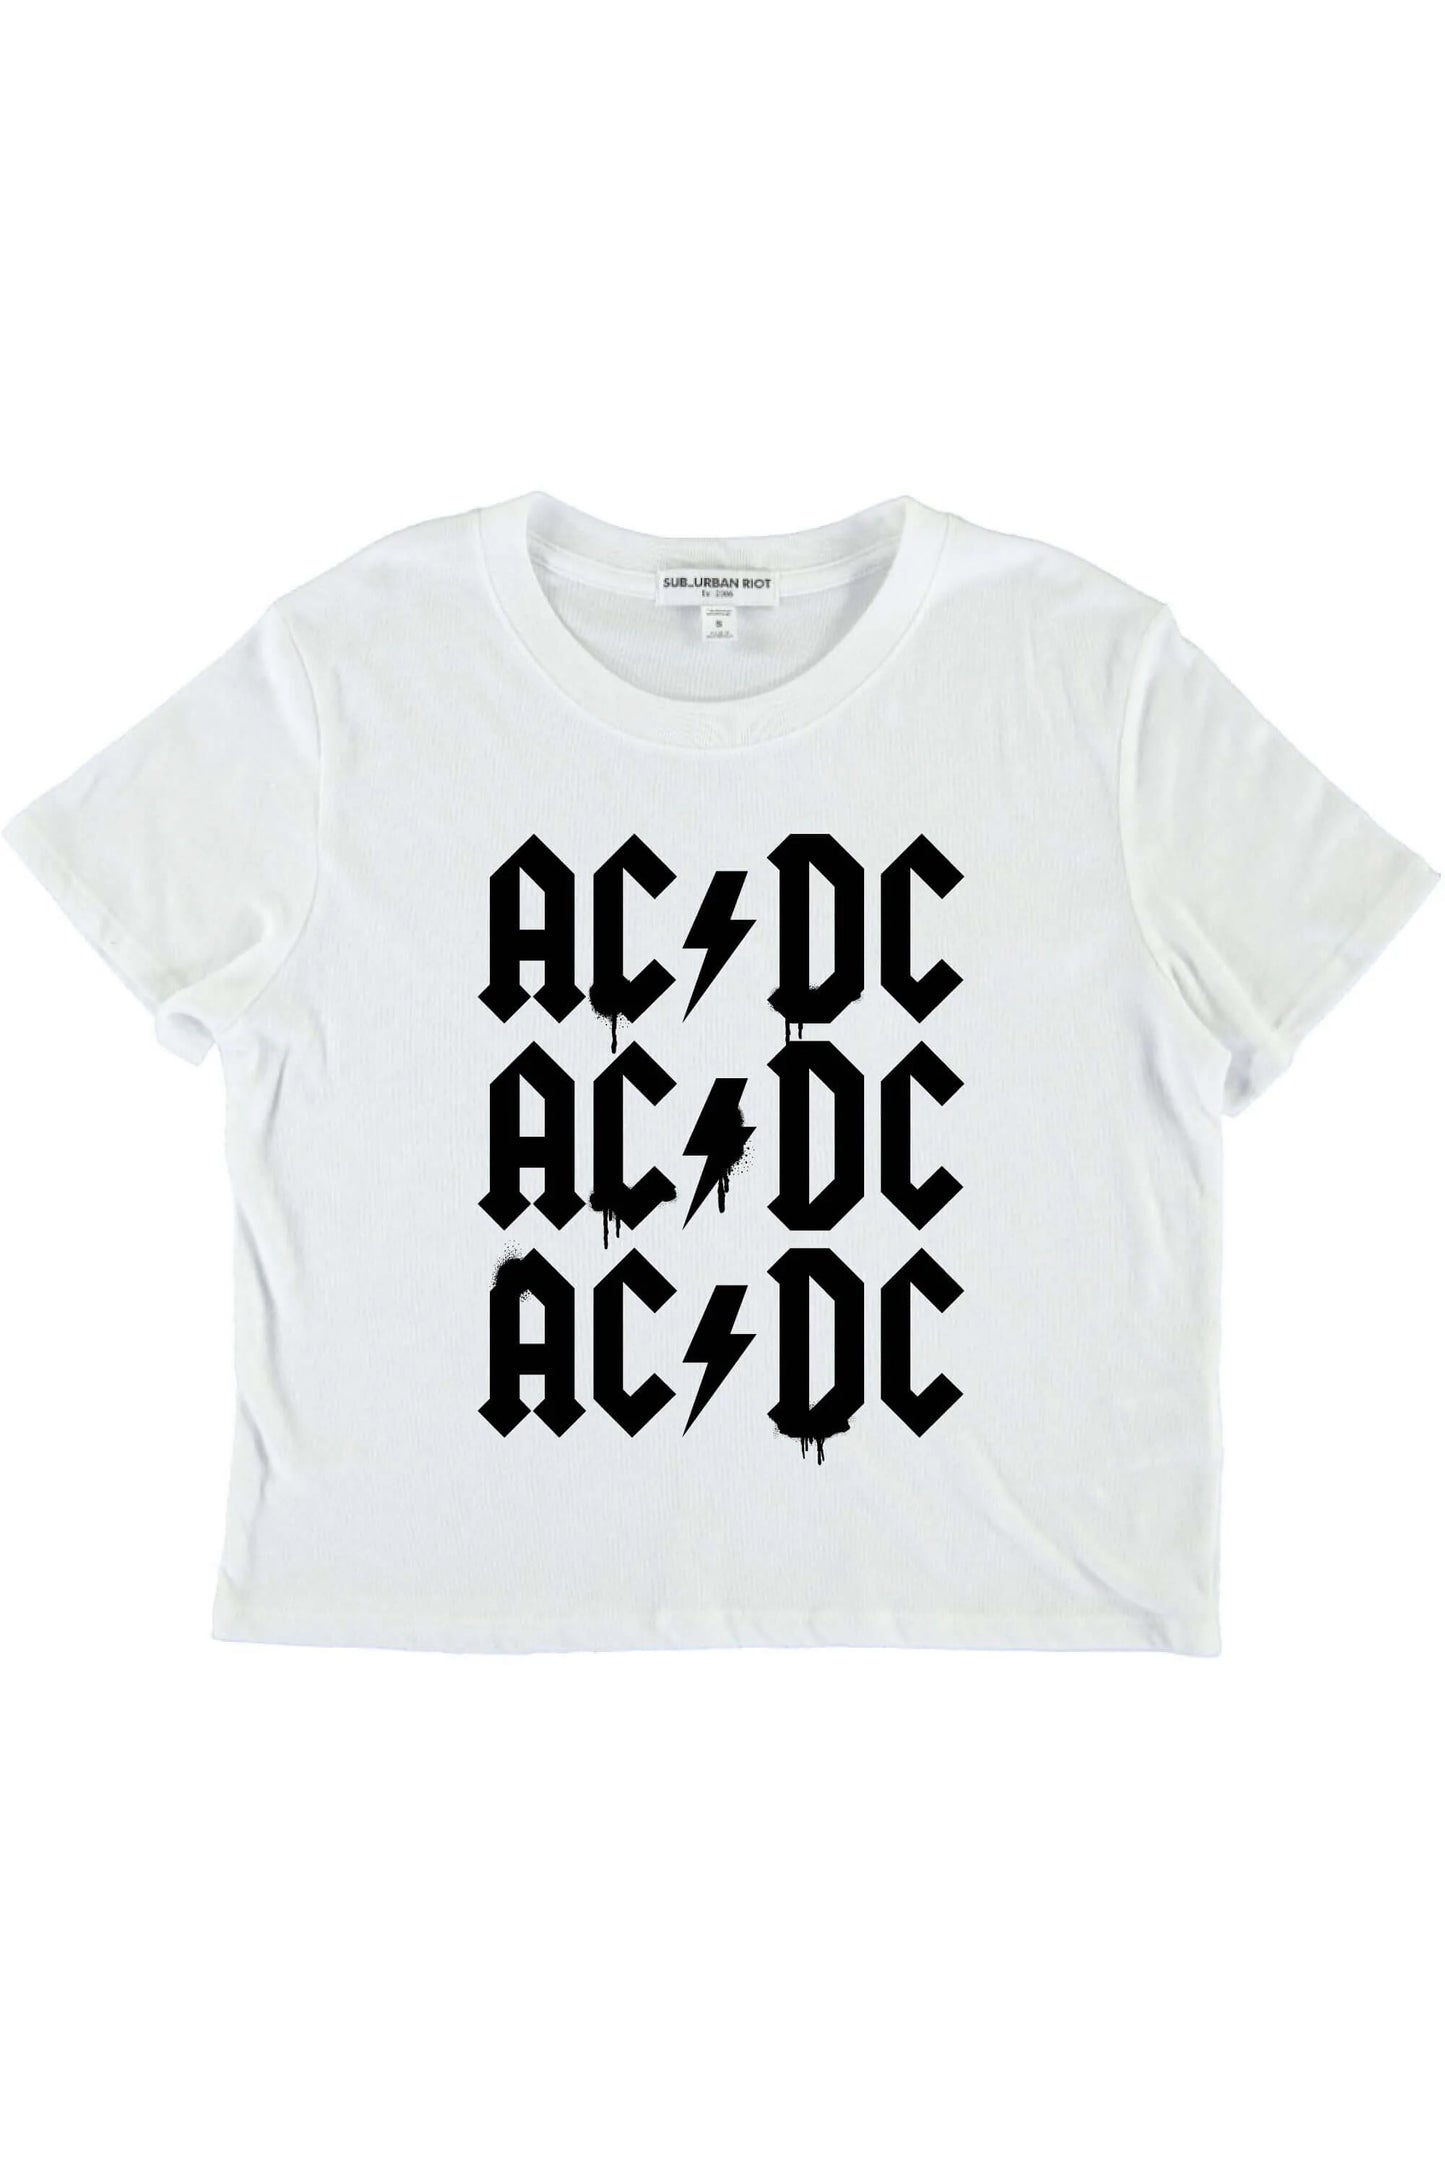 AC/DC white shirt